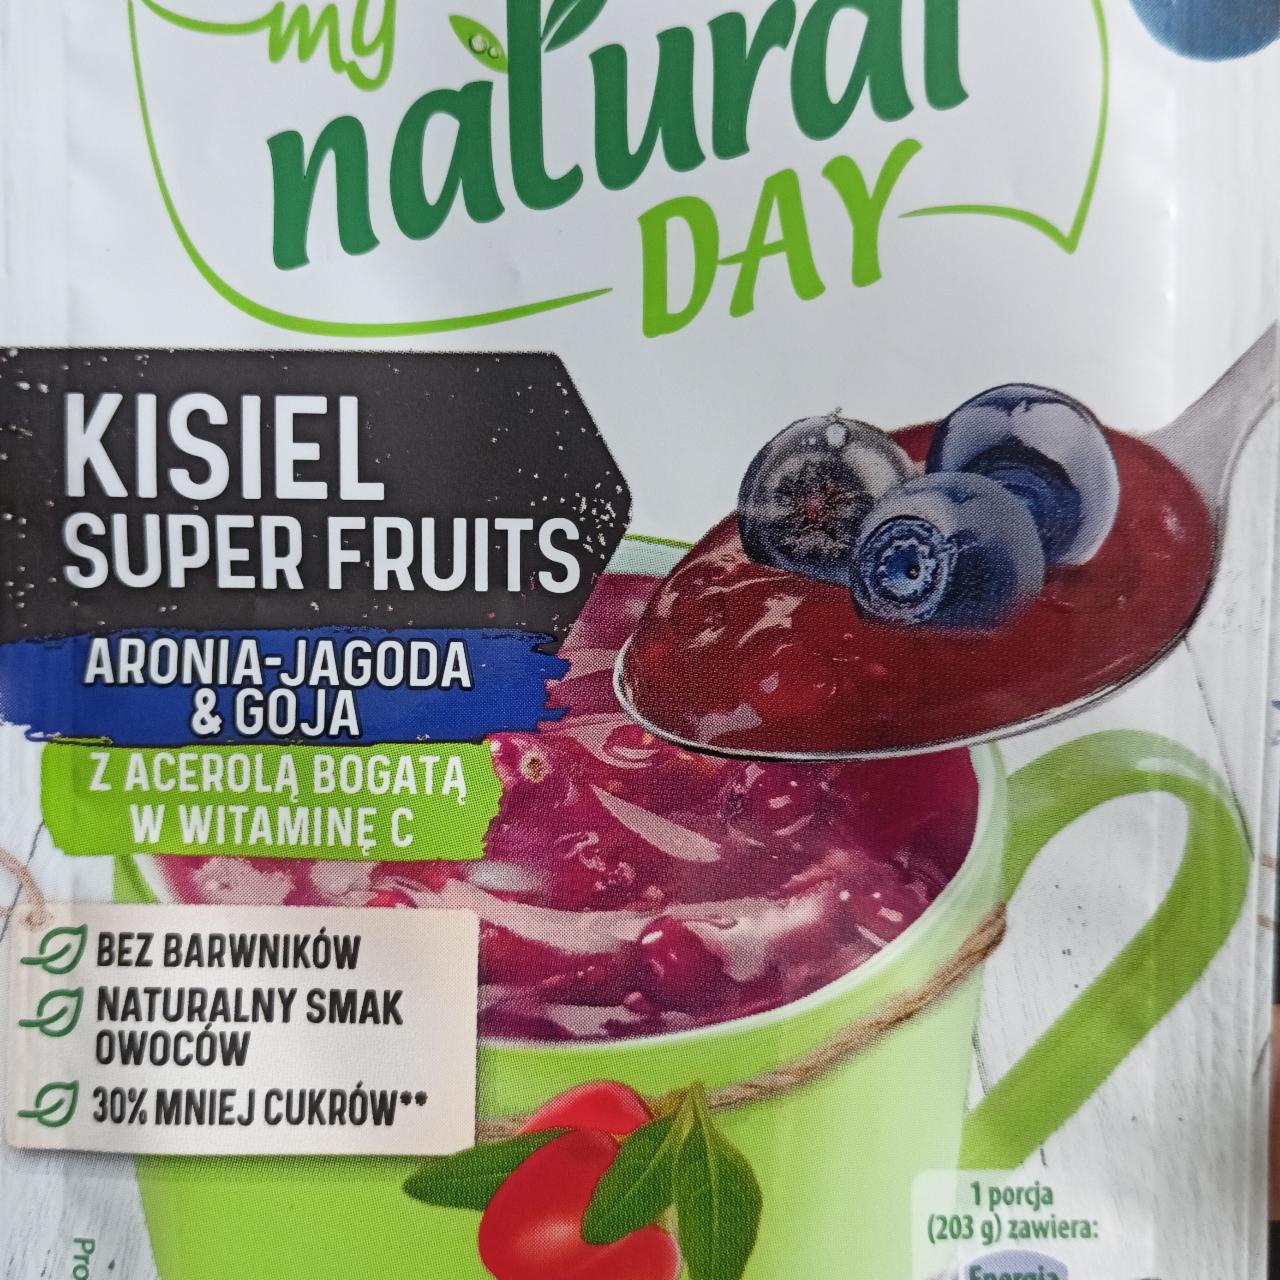 Zdjęcia - My natural Day Kisiel Super Fruits Jagoda-Aronia & Goya Dr. Oetker